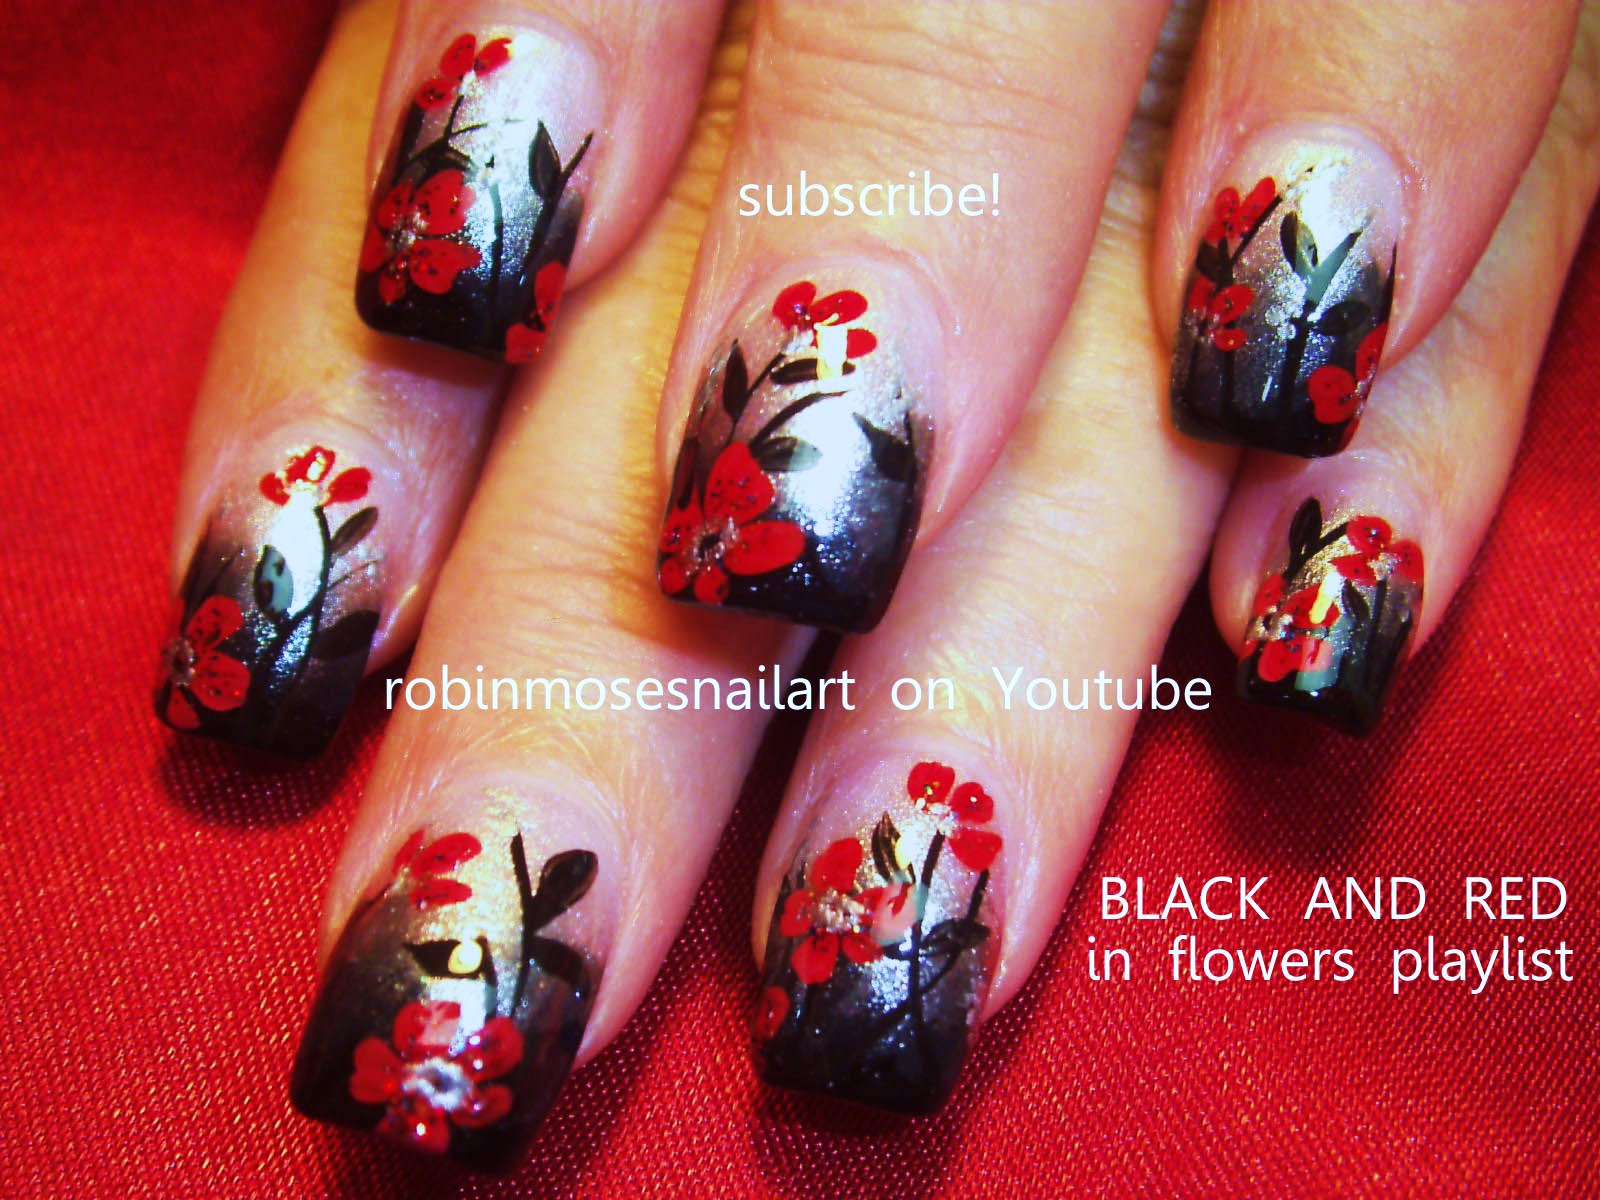 http://4.bp.blogspot.com/-KV4Sw7qBI5E/T_sgYMcvnHI/AAAAAAAABkI/9DIfMTucxqQ/s1600/black+and+red+flowers+playlist.jpg